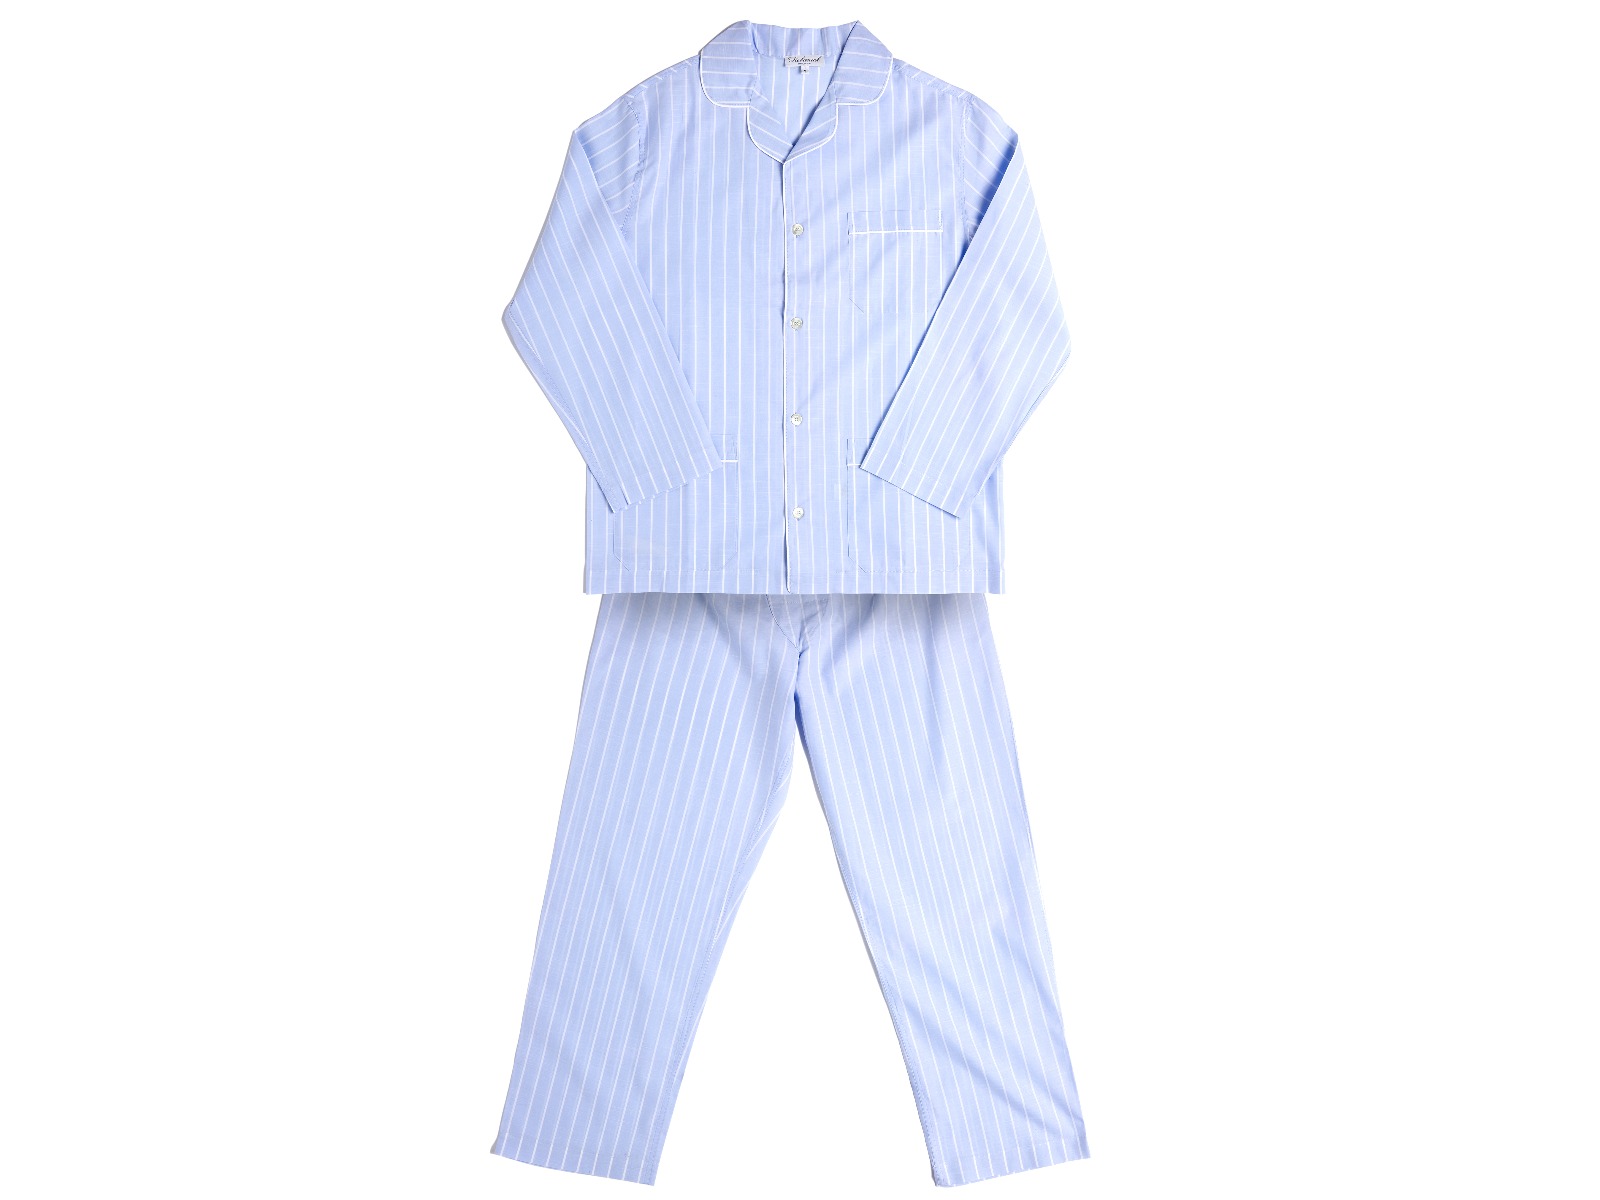 Siebaneck, i pigiami artigianali italiani: - uomo  - mod. 1 Uomo azzurro rigato bianco 